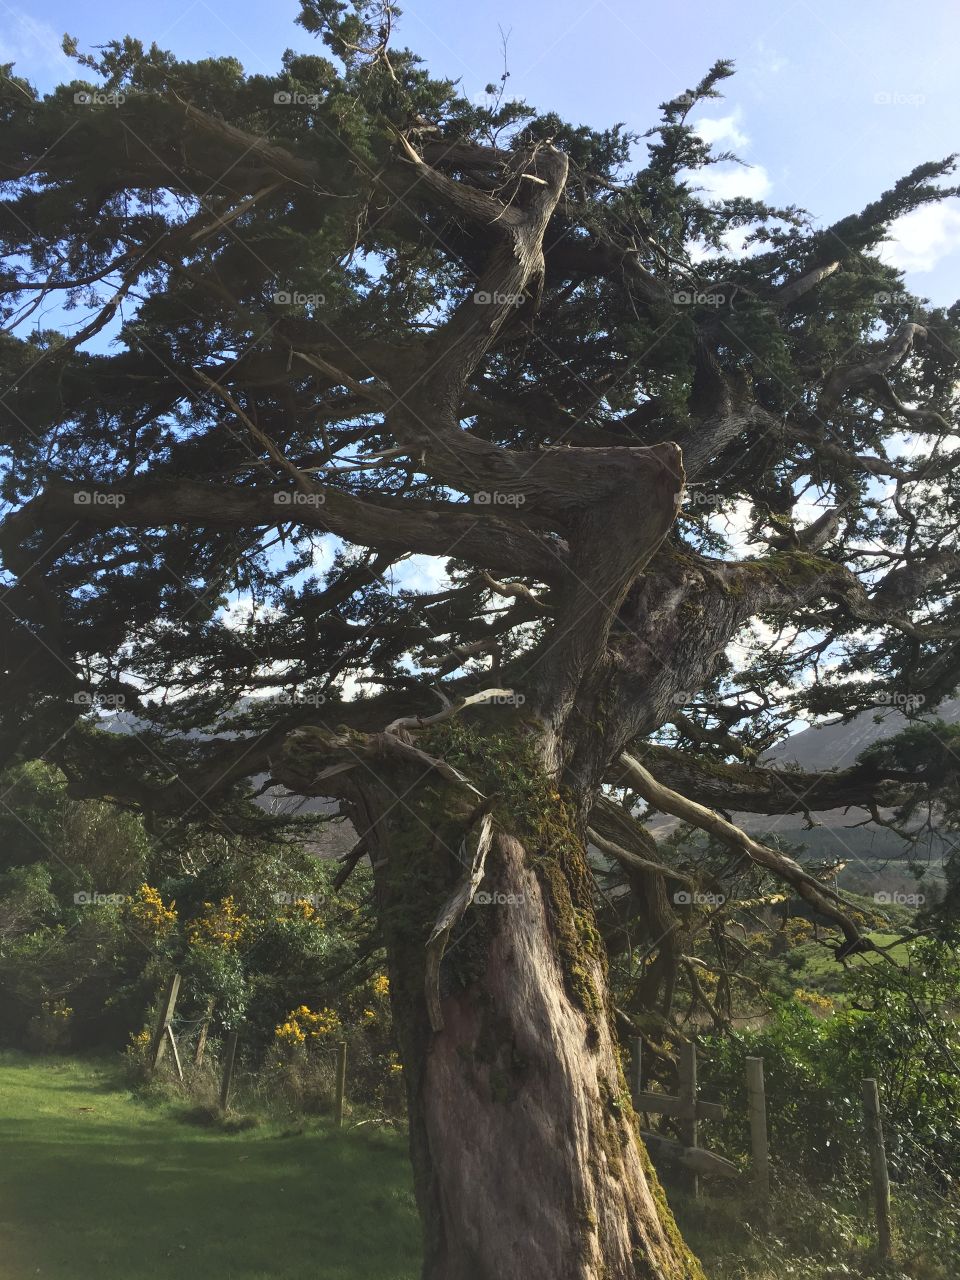 Irish crooked tree